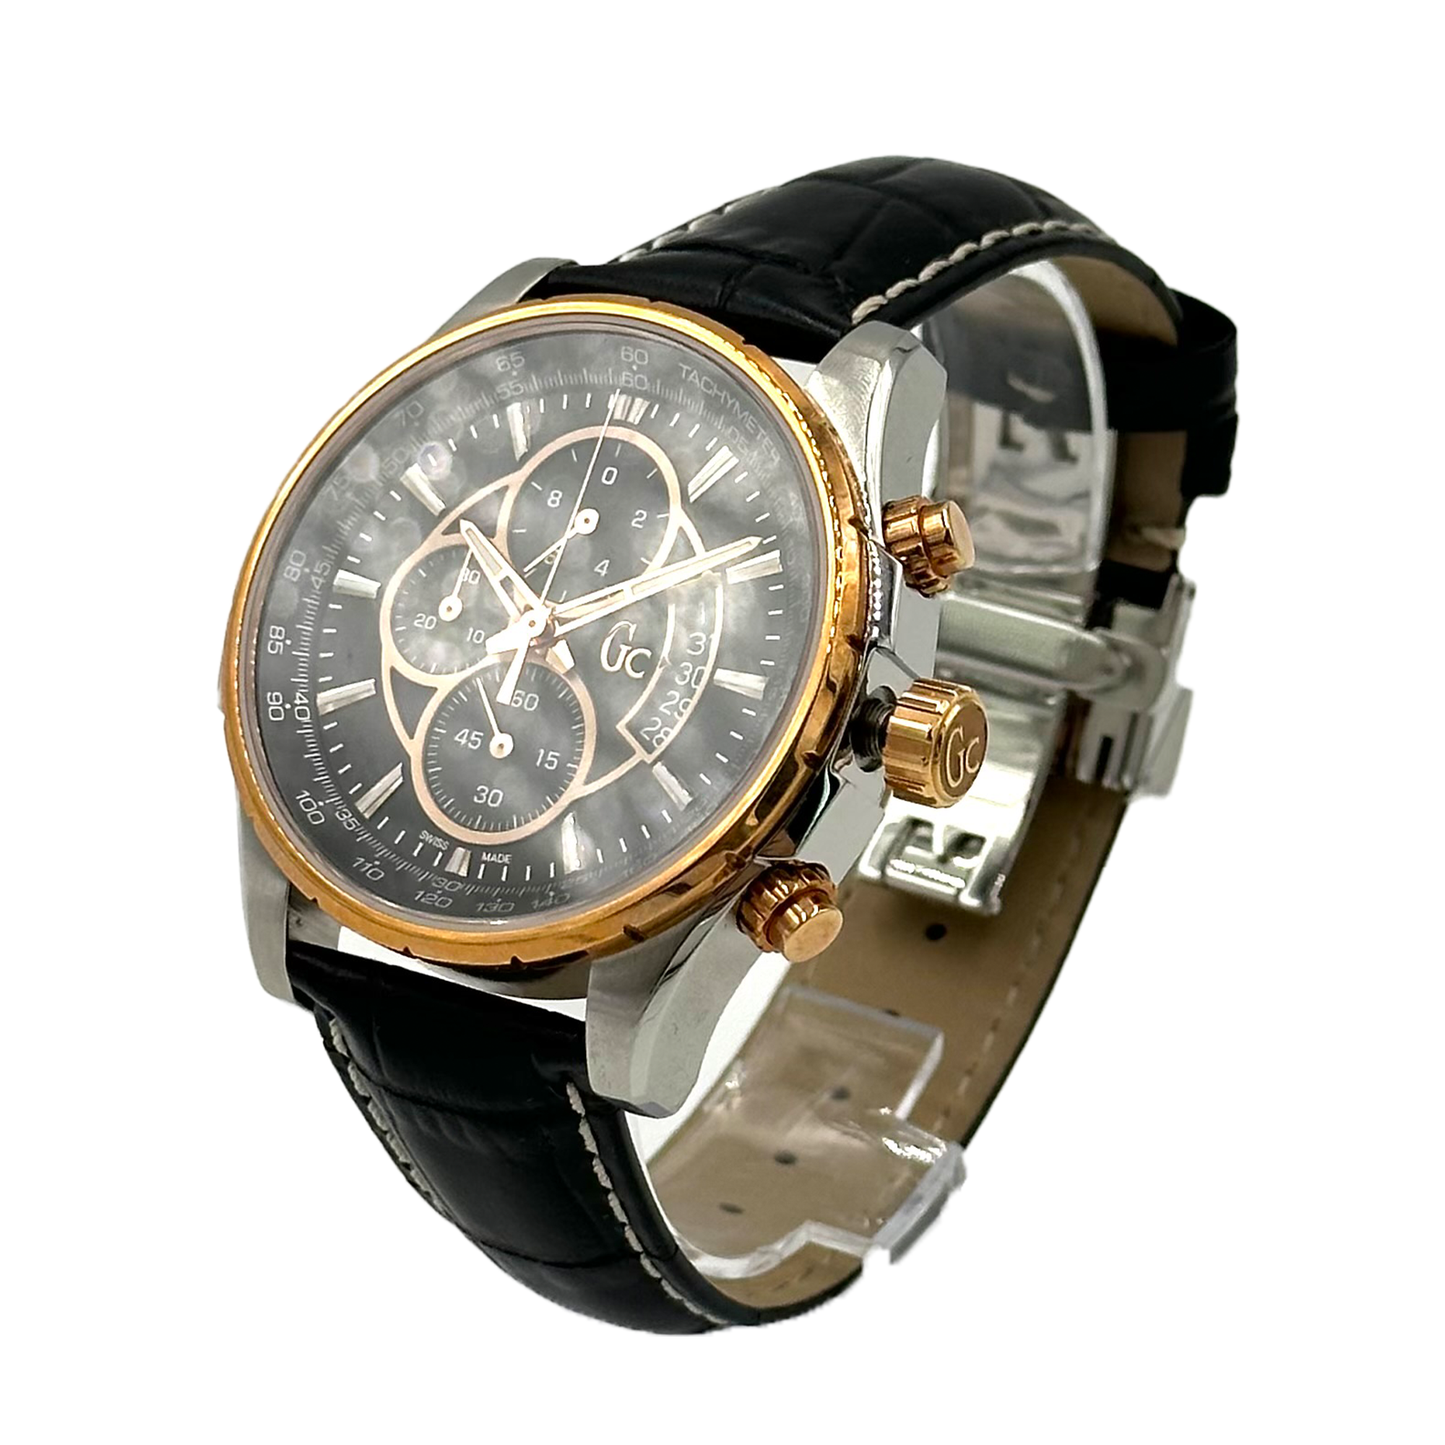 Guess Collection Men's Black Chronograph Dial Quartz Analog Watch - X81007G2S - 91661414824